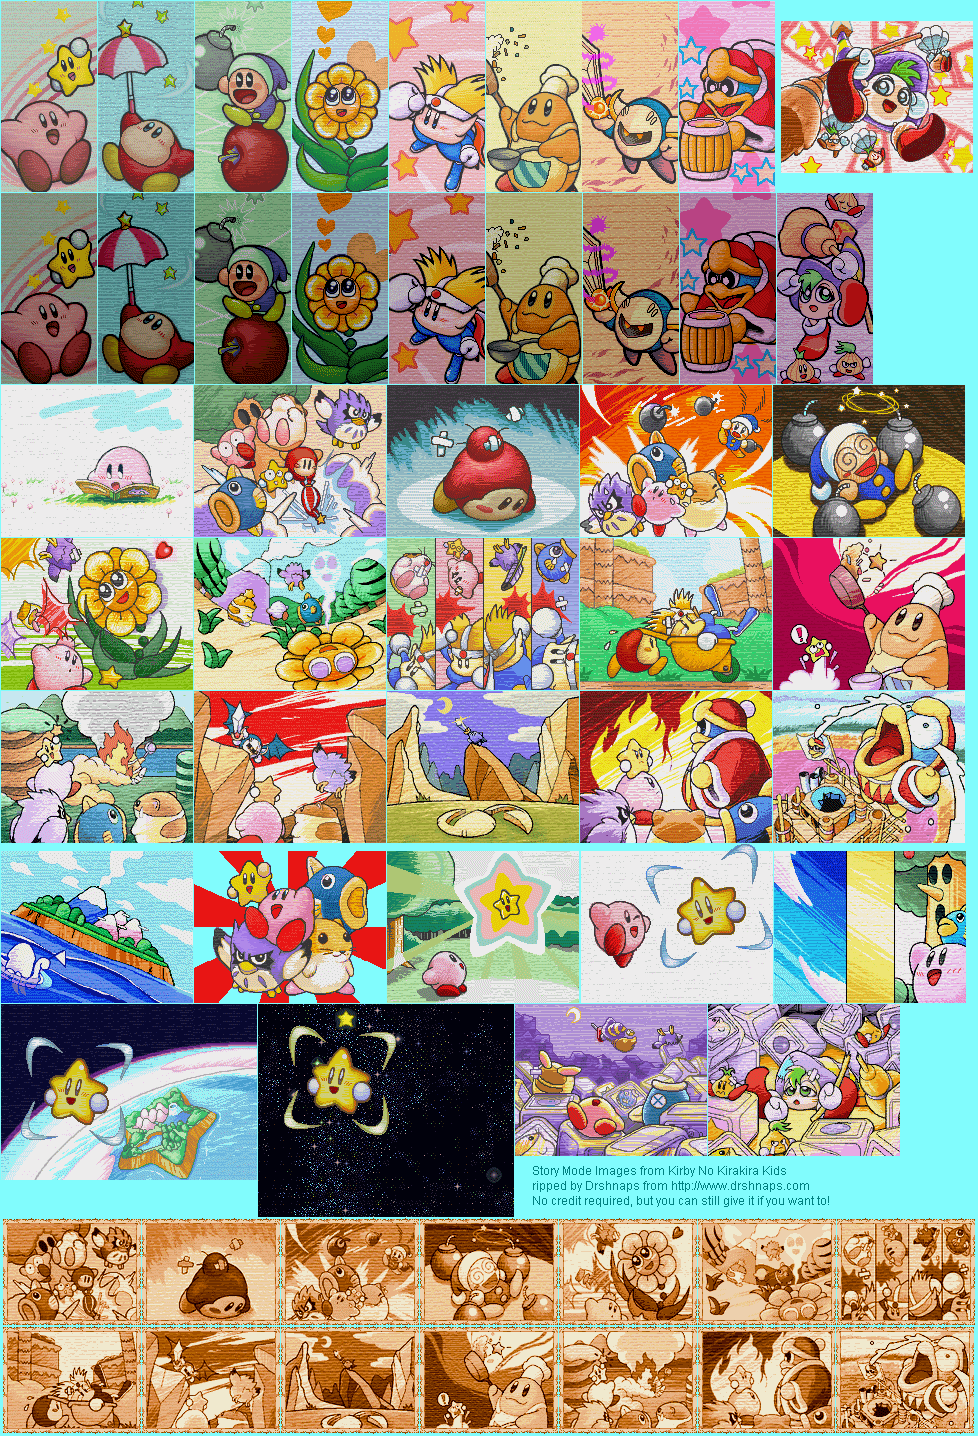 Kirby's Star Stacker / Kirby no Kirakira Kizzu (JPN) - Story Mode Cutscenes